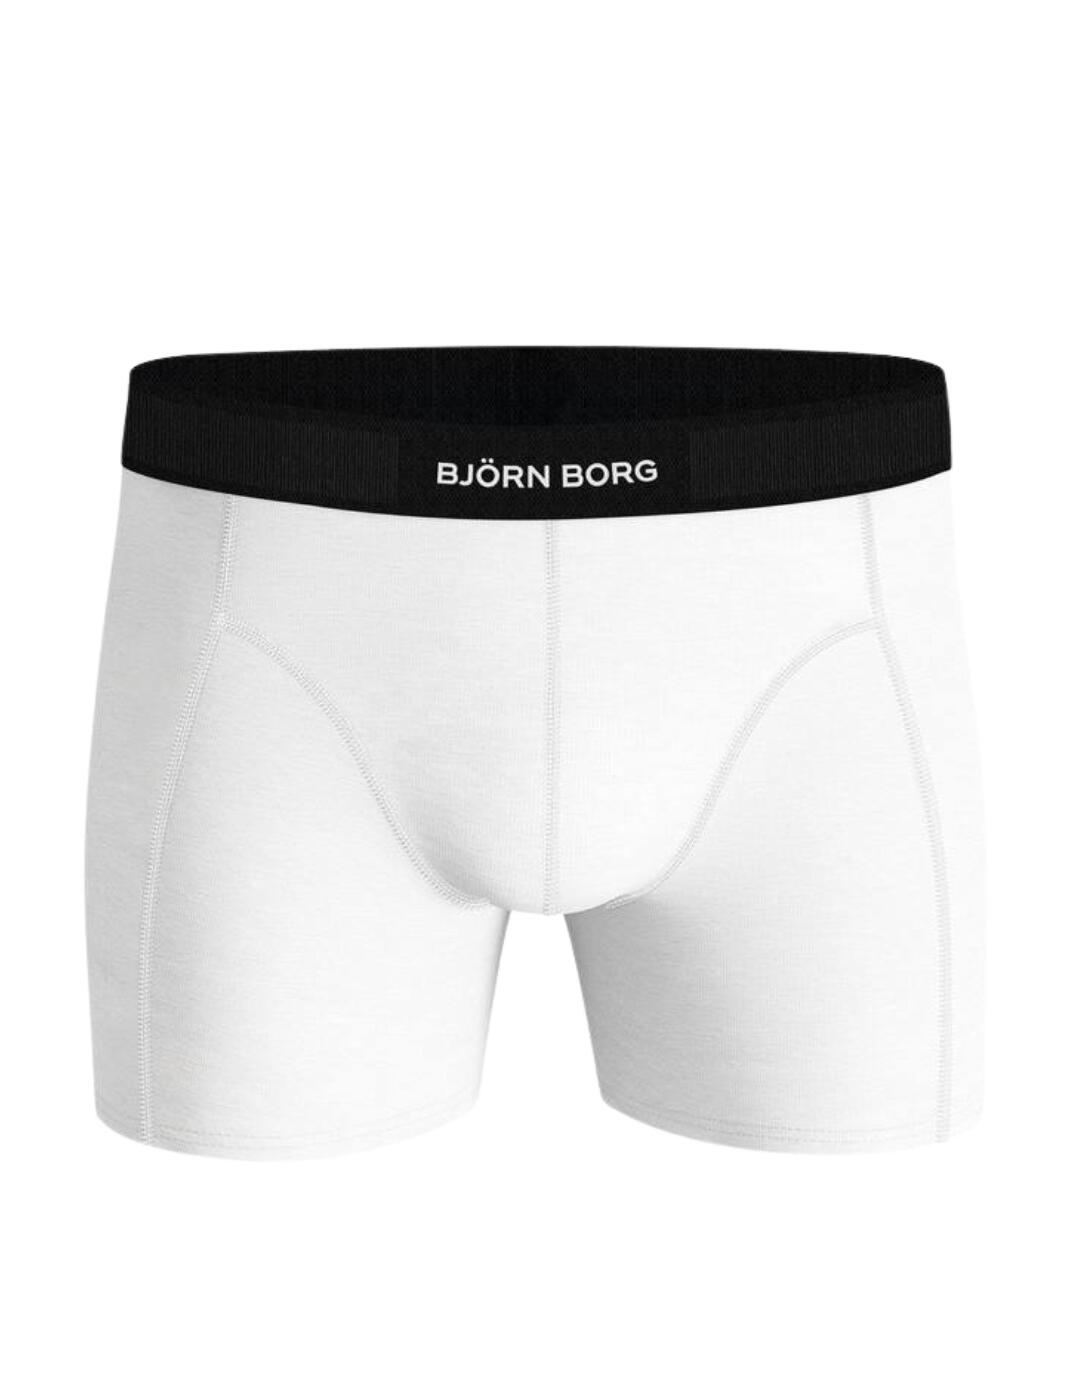 Bjorn Borg Performance Boxer Short 10001297 Mens Underwear 2 Pack Shorts